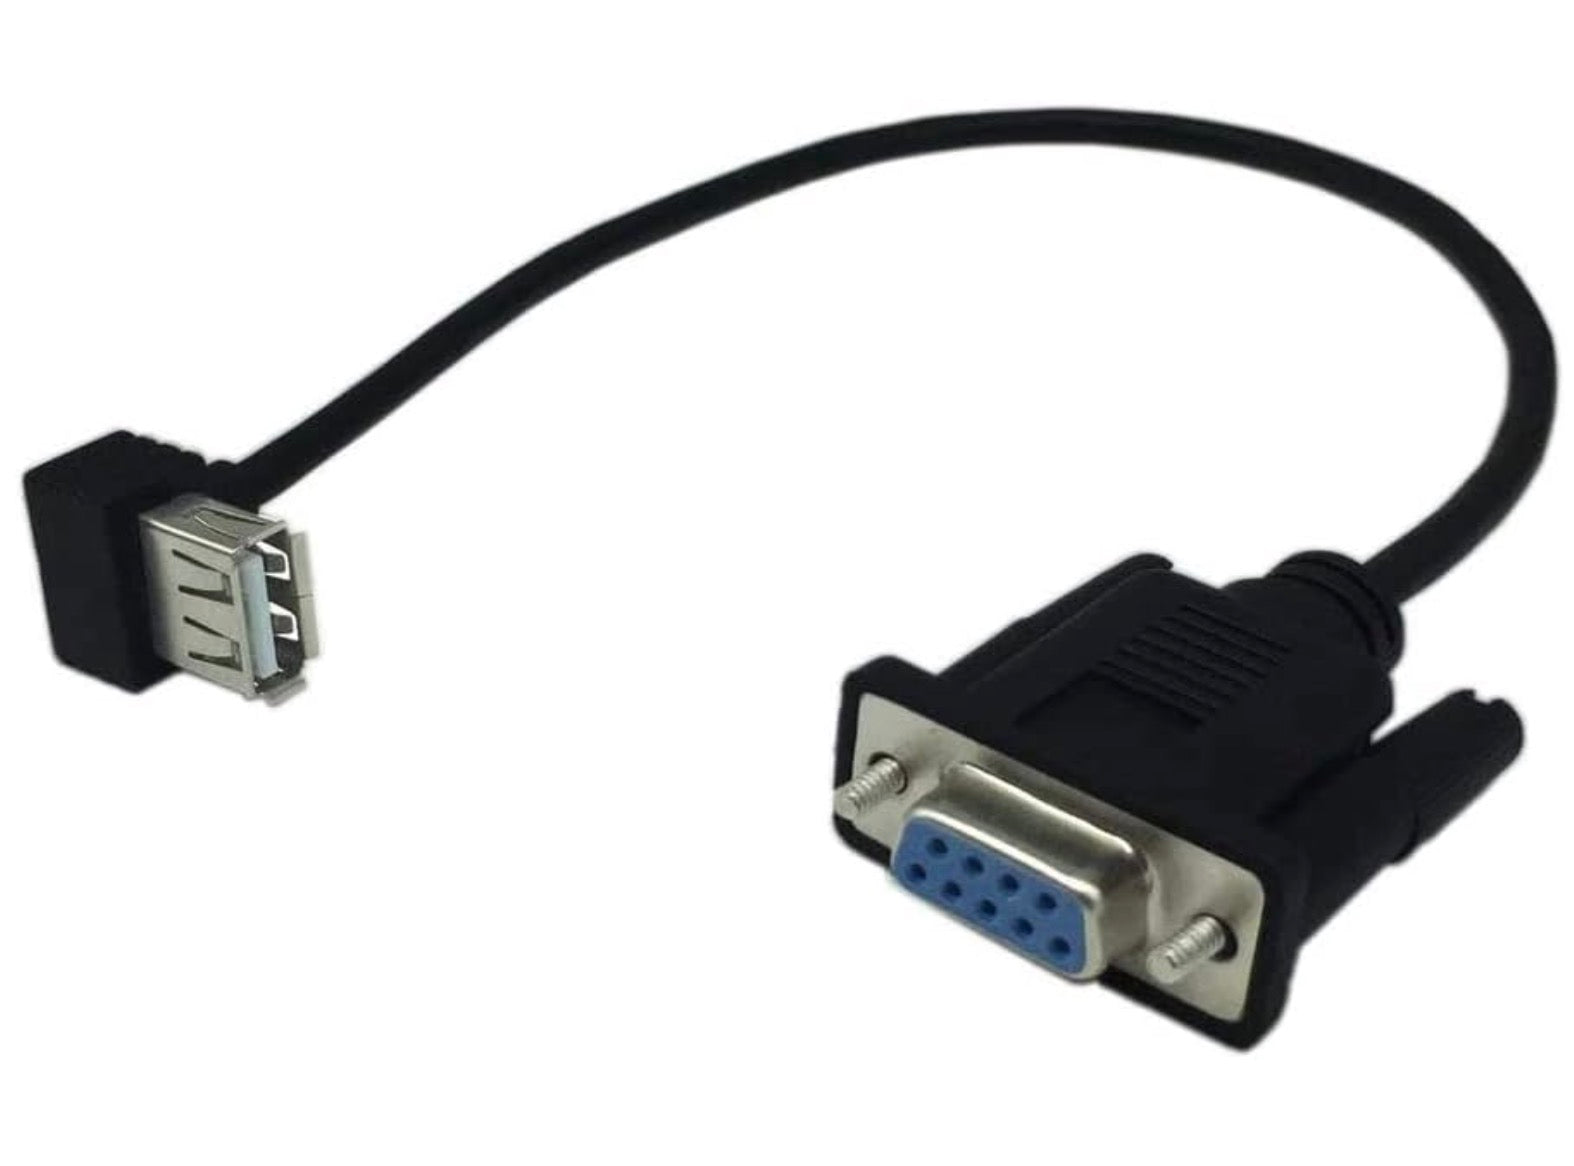 USB 2.0 to Serial RS232 DB9 Female Converter Cable for Cashier Register, Modem, Scanner, Digital Cameras